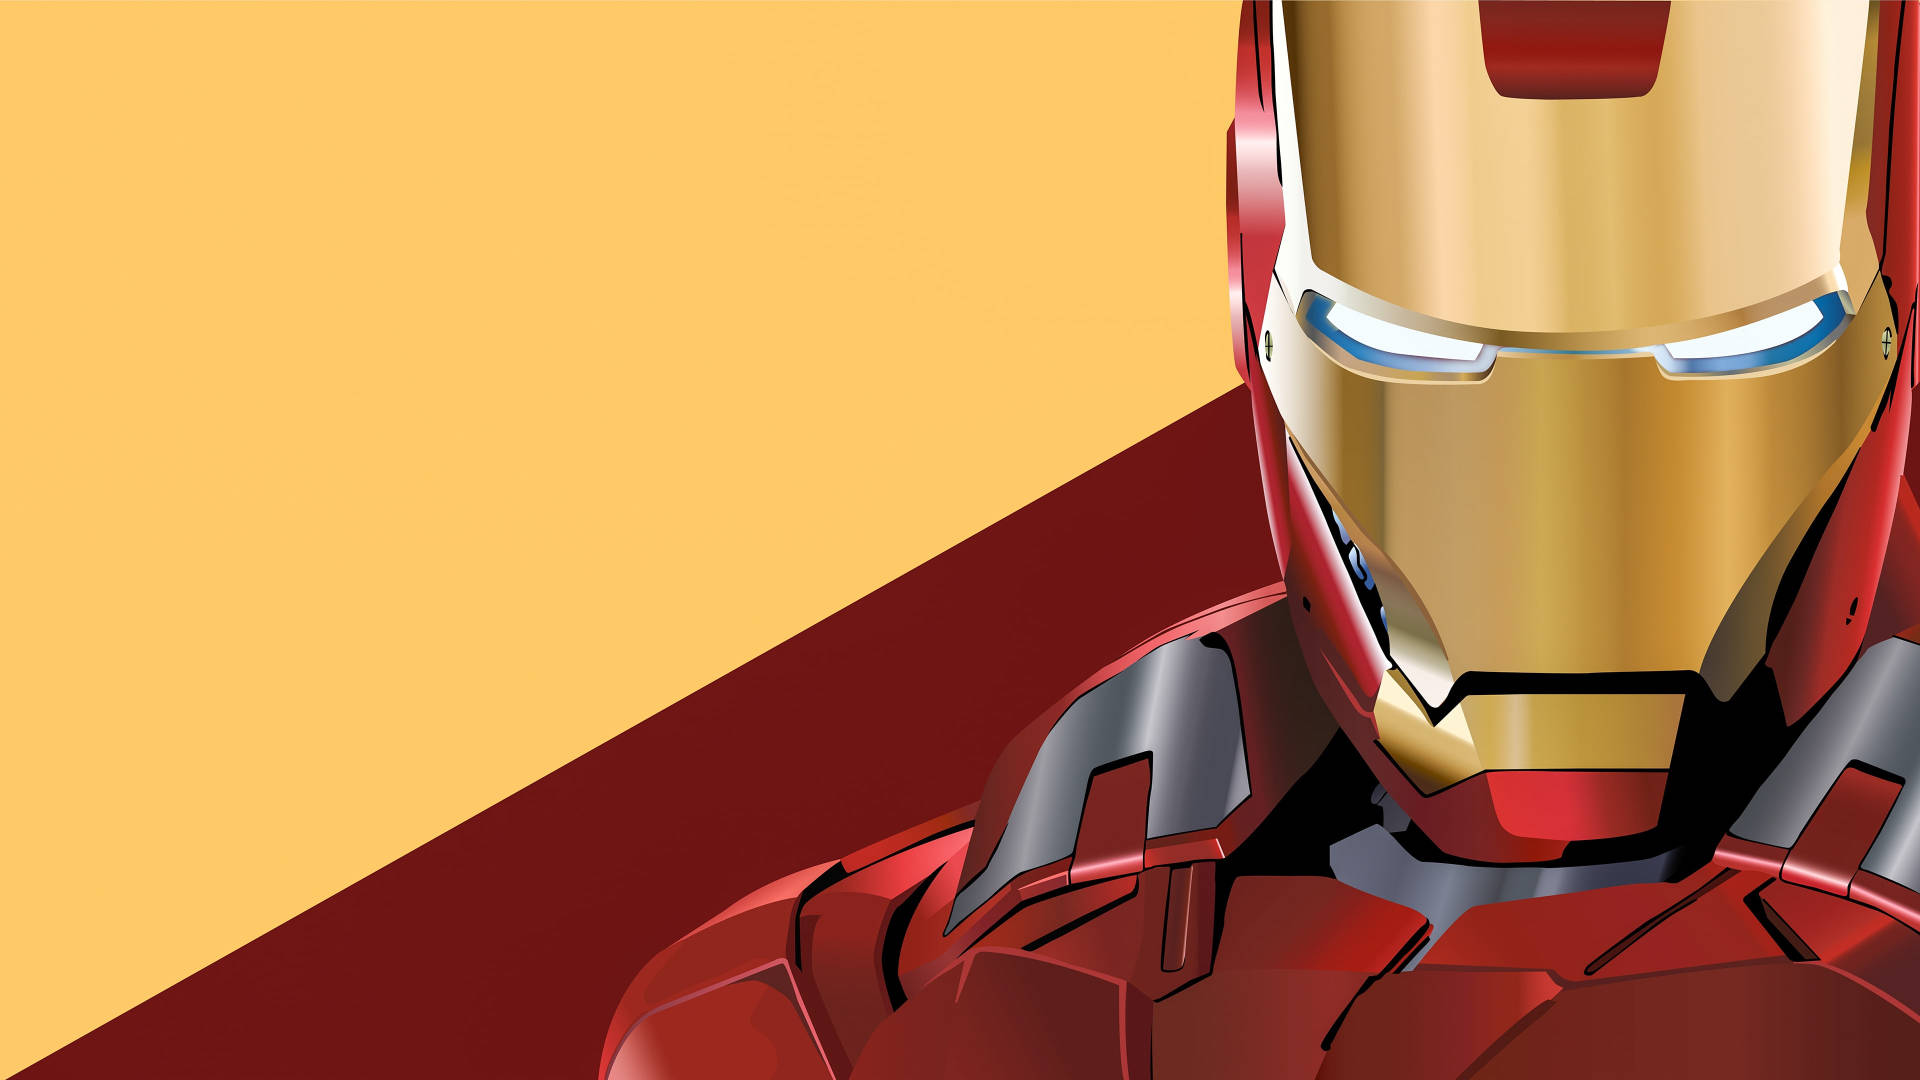 Hd Superhero Iron Man Suit And Armor Wallpaper